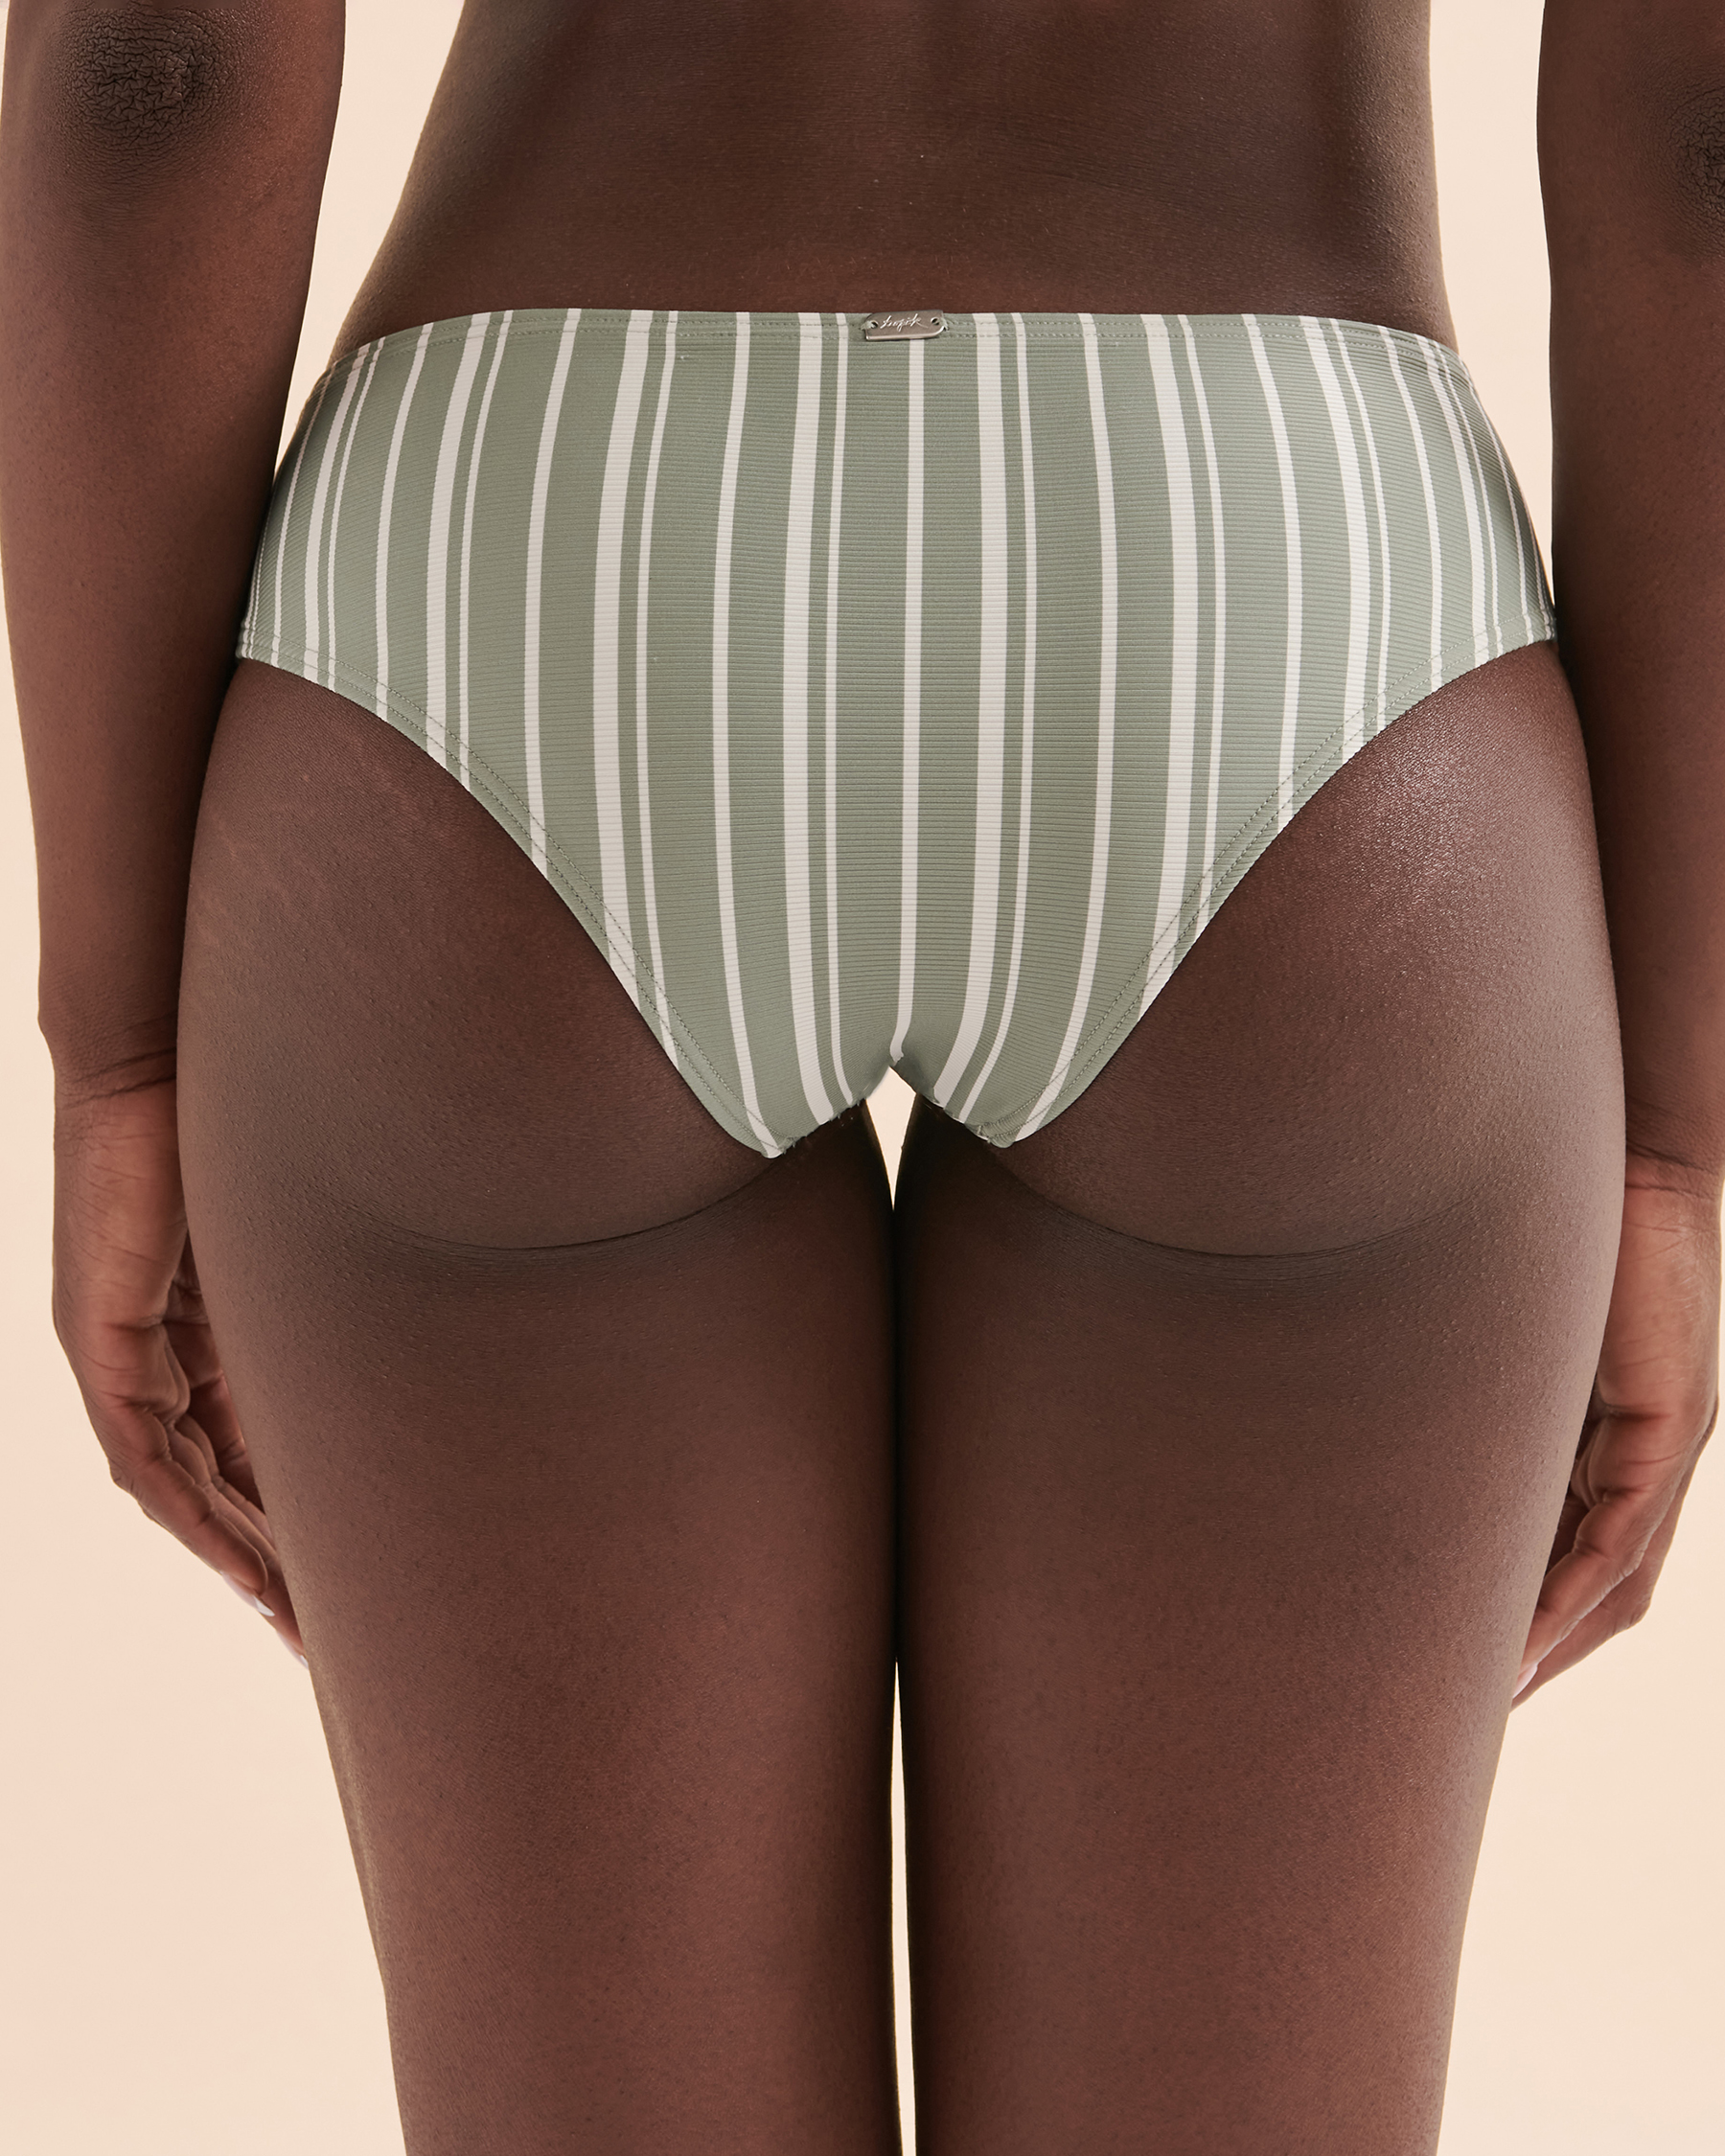 TROPIK Textured Stripes Cheeky Bikini Bottom Green stripe 01300244 - View4